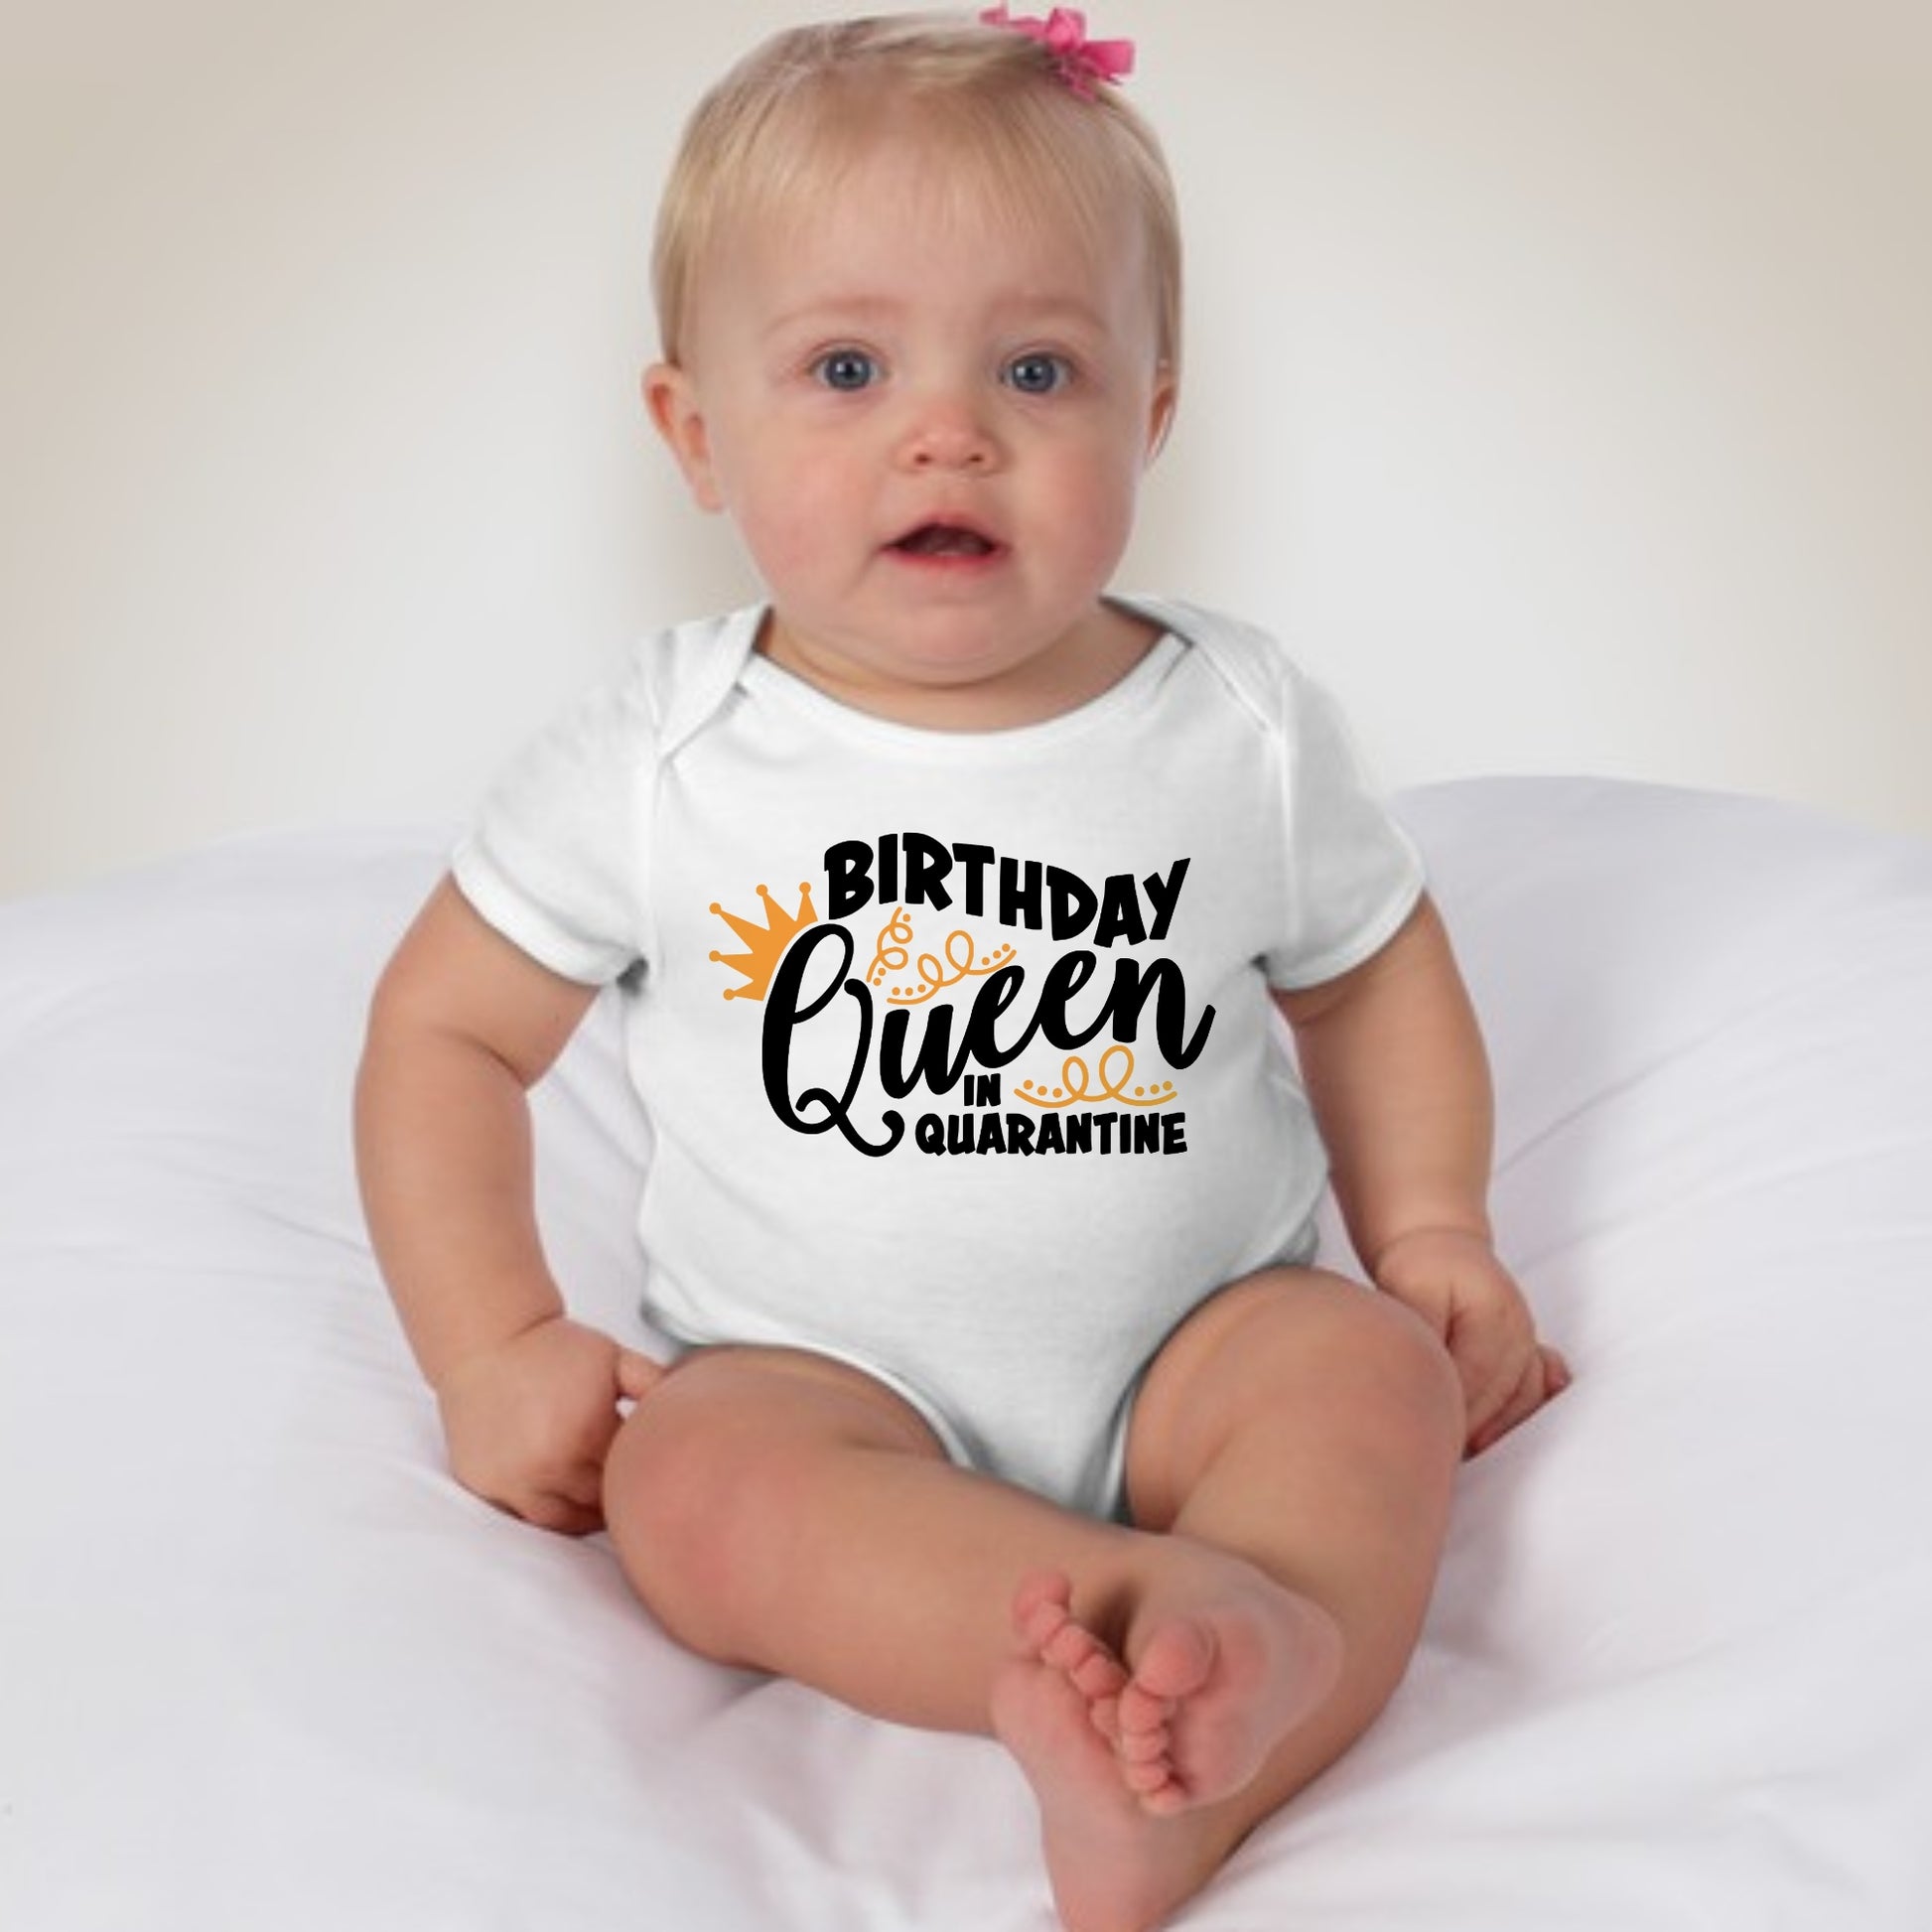 Baby Birthday Onesies  - Quarantine Queen - MYSTYLEMYCLOTHING